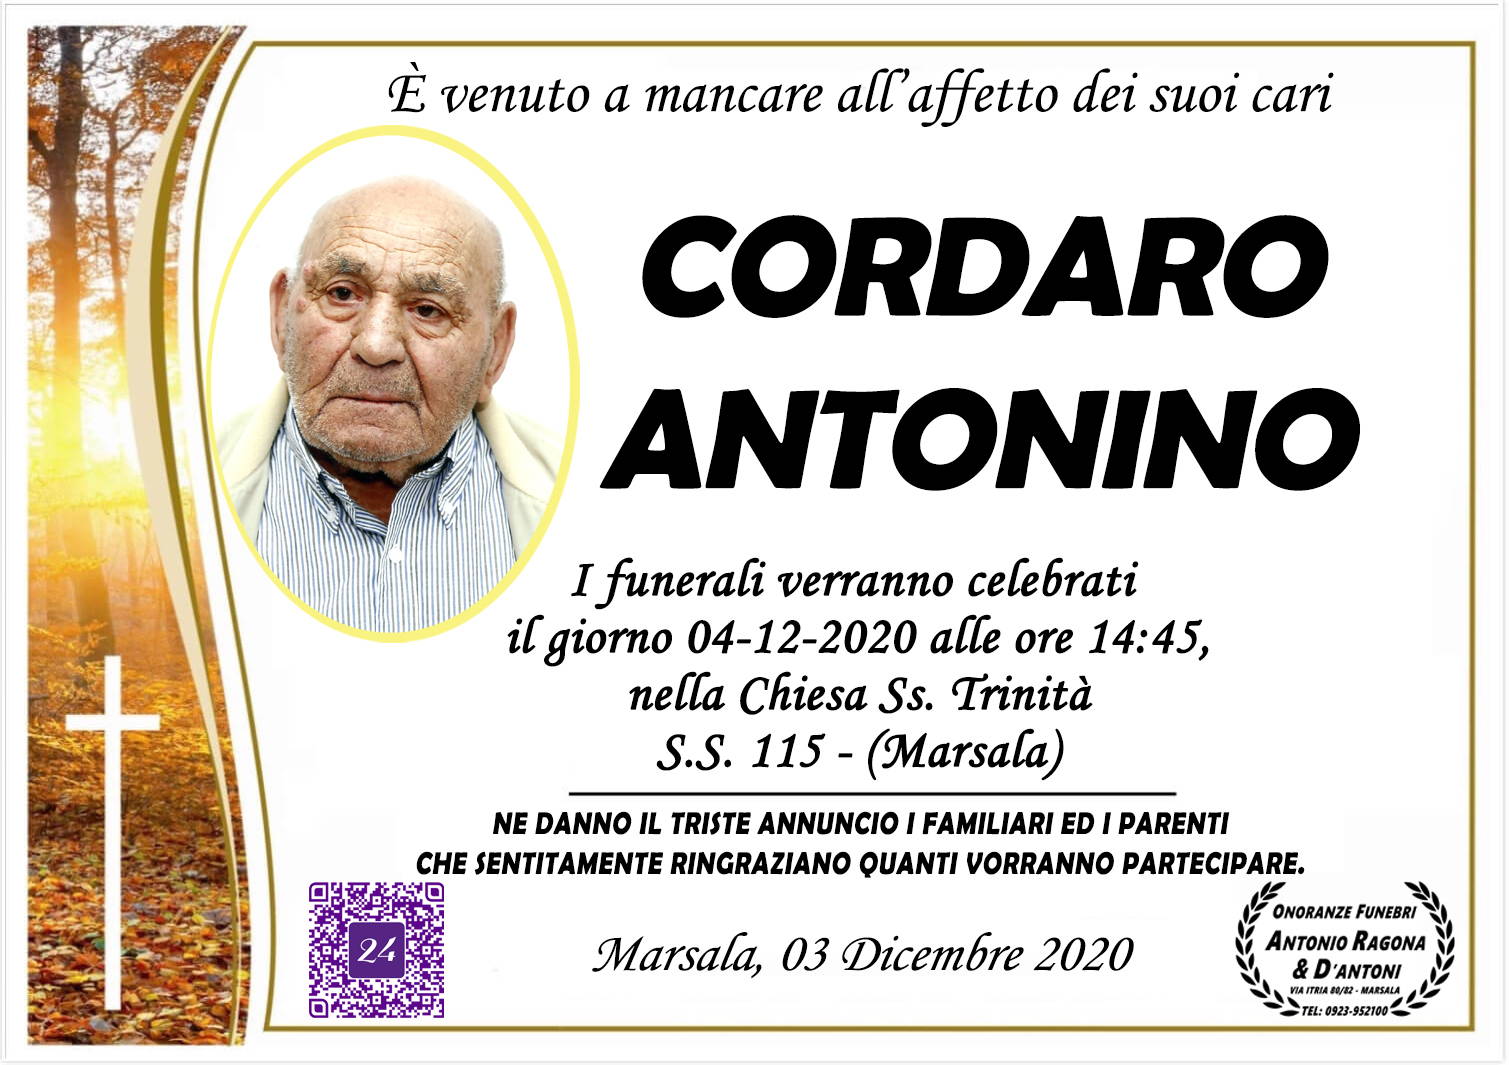 Antonino Cordaro